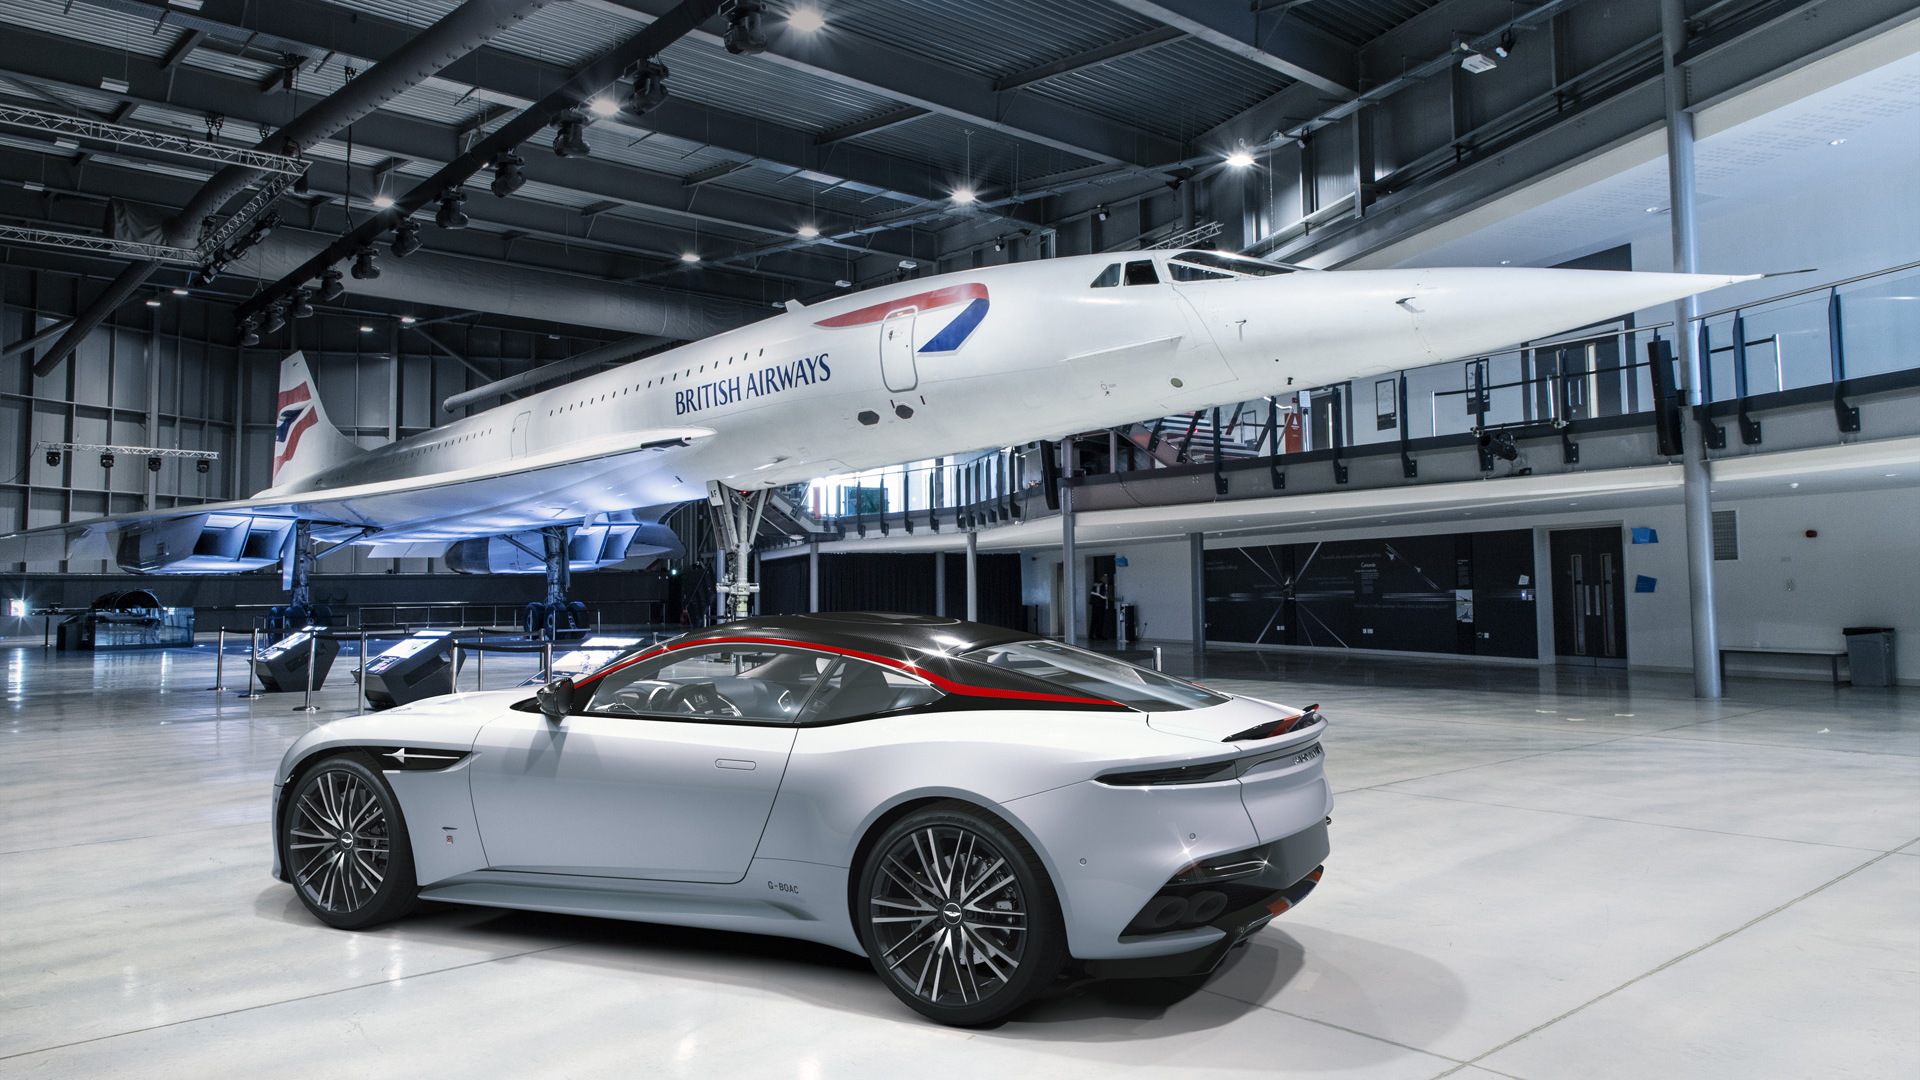 2019 Aston Martin DBS Superleggera Concorde edition